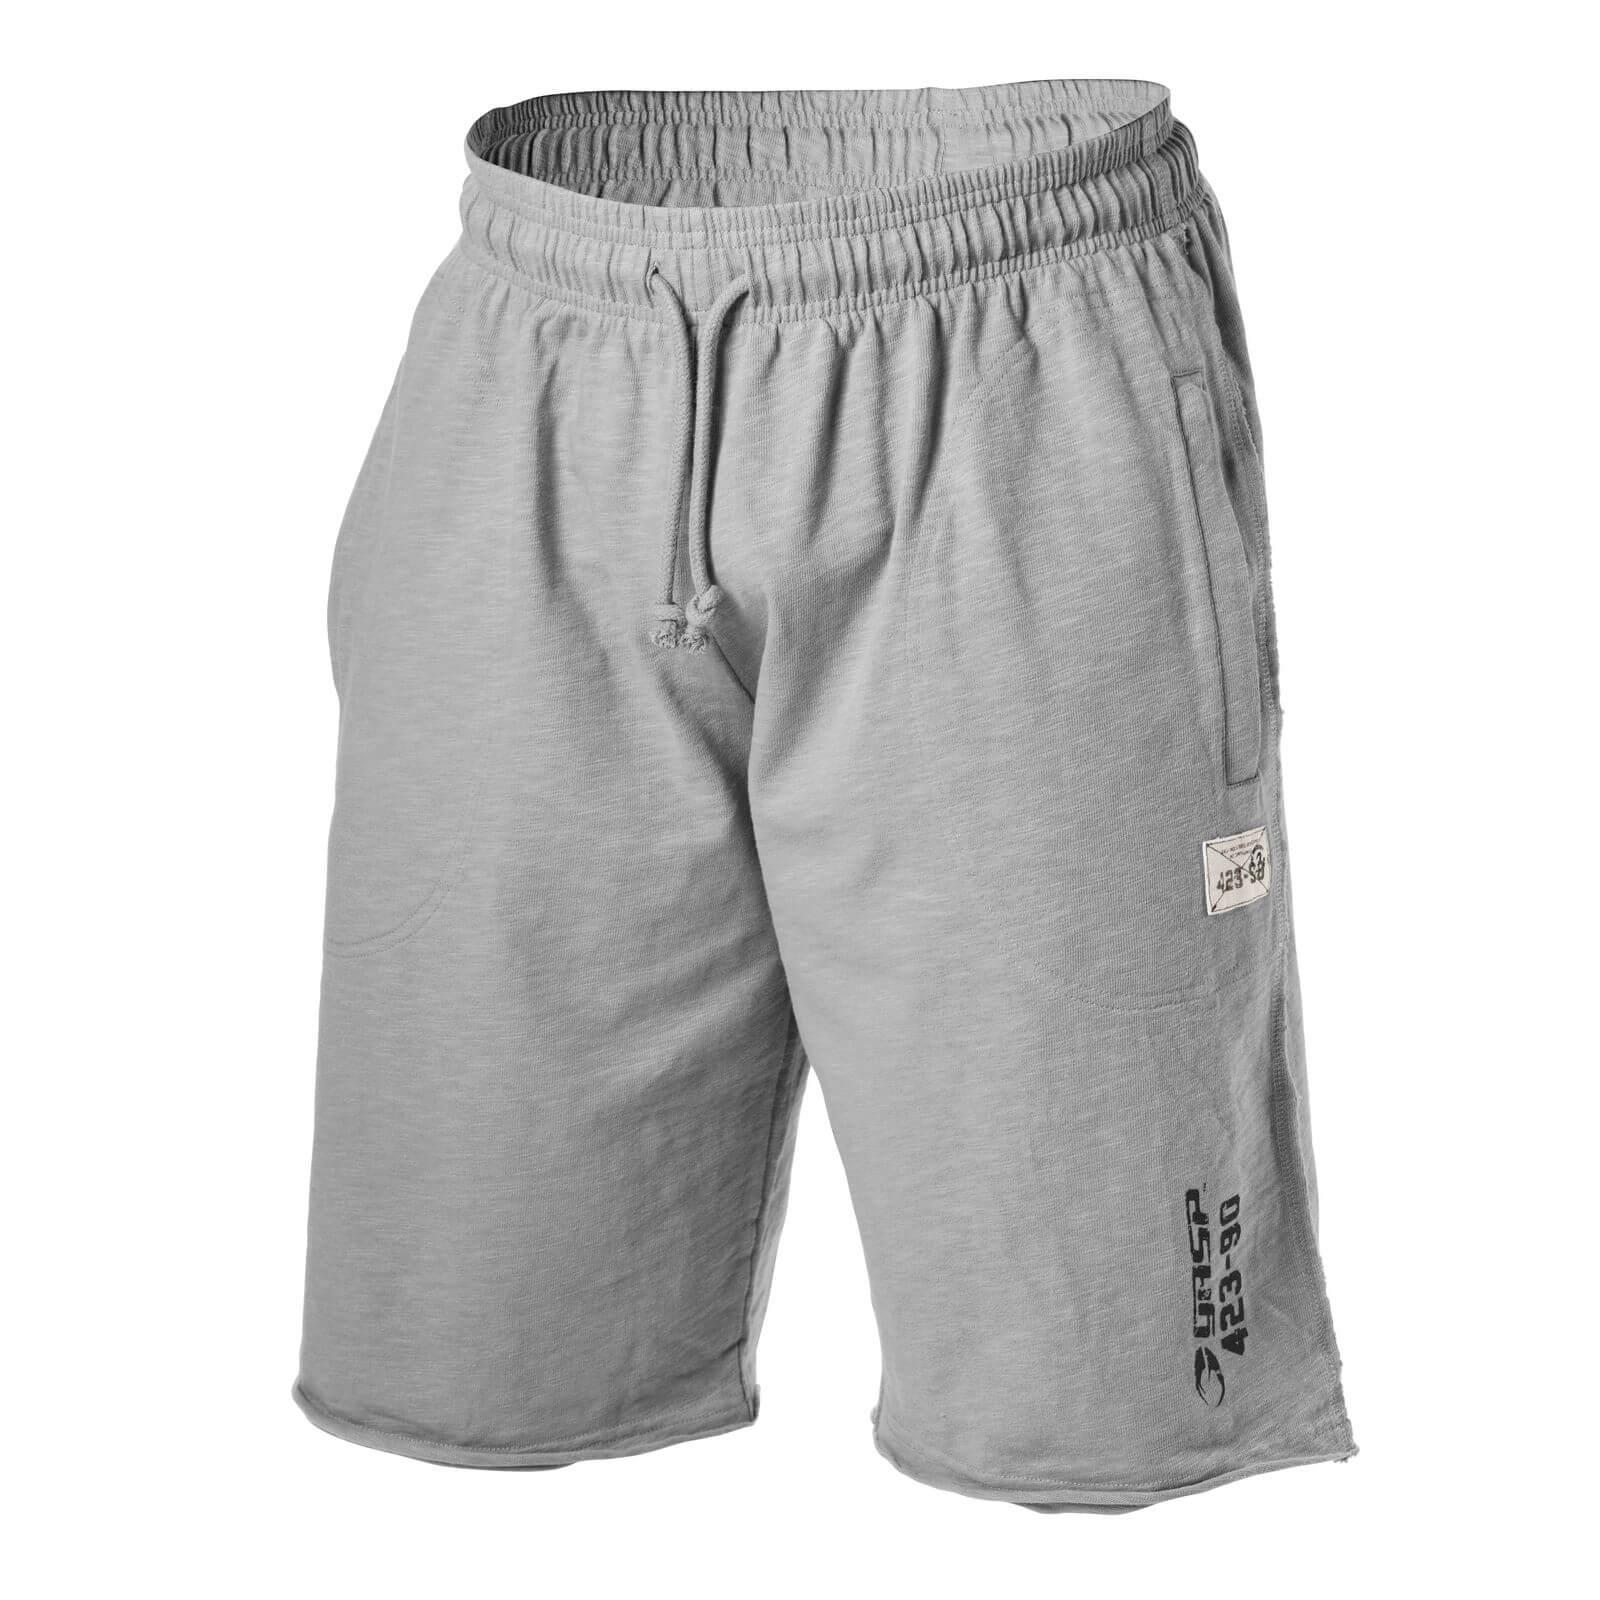 Sjekke Throwback Sweat Shorts, light grey, GASP hos SportGymButikken.no